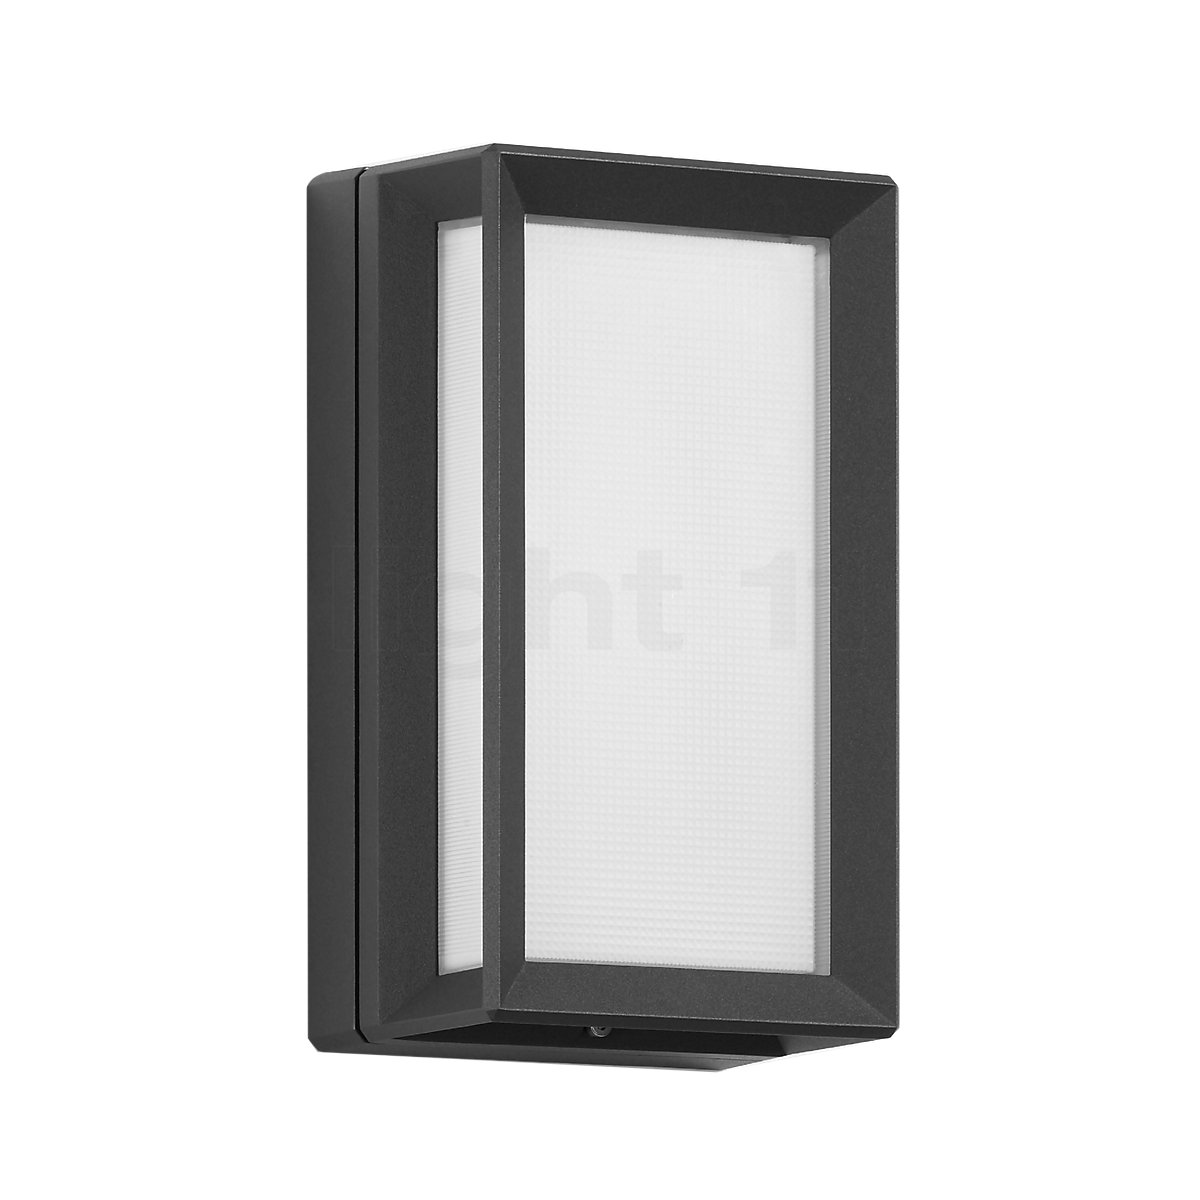 Buy Bega 22751 wall-/ceiling light LED at